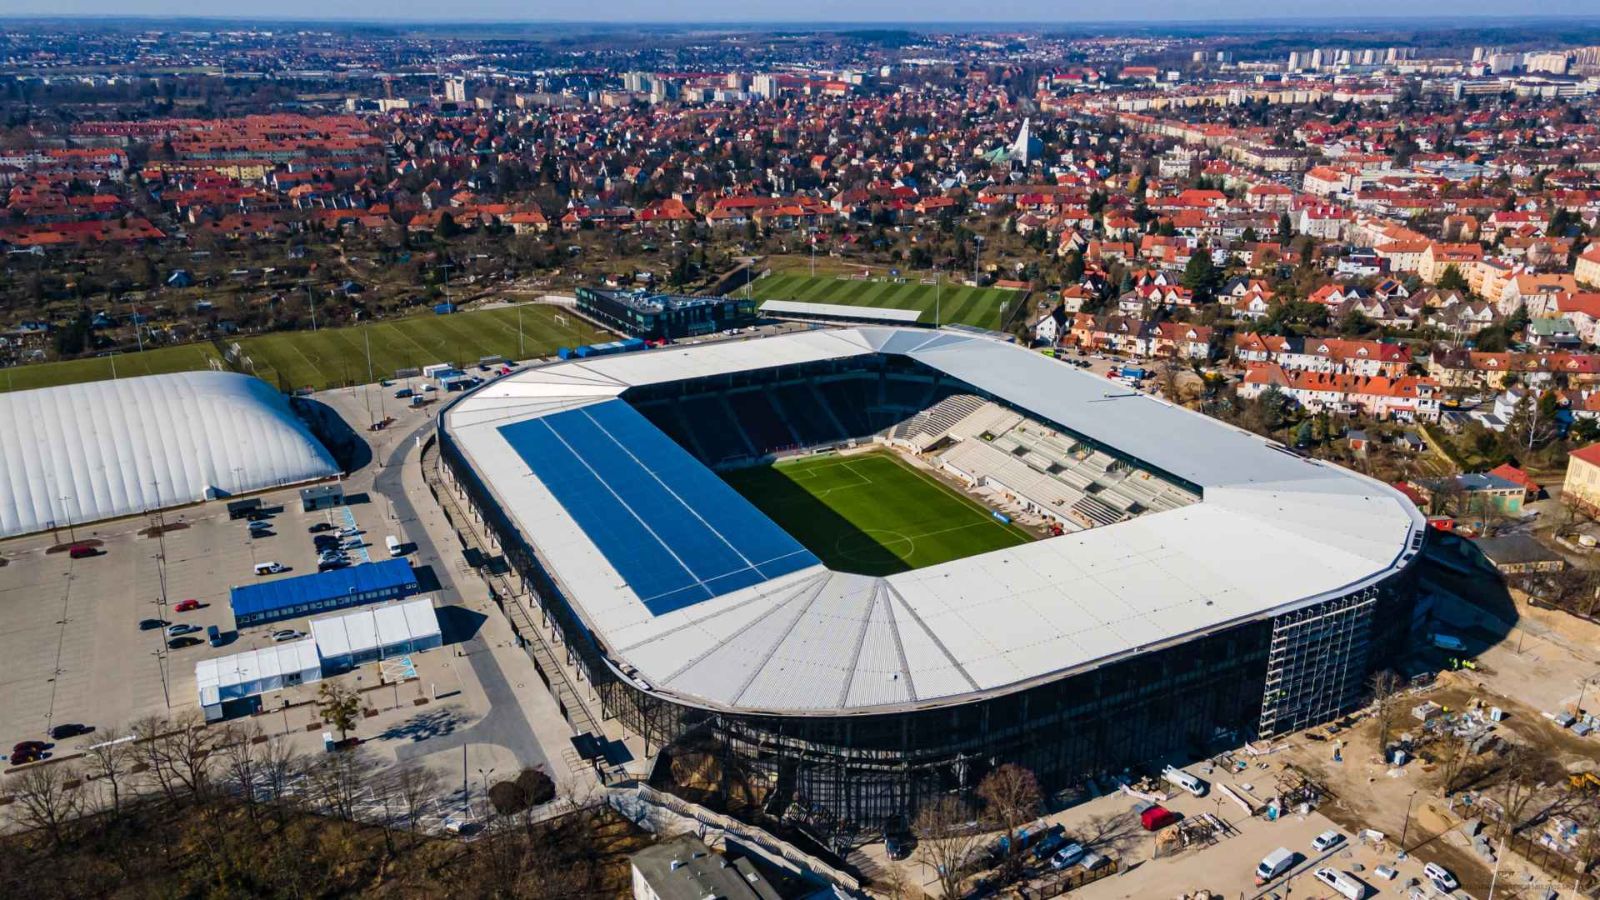 Stadion_Miejski (6).jpg